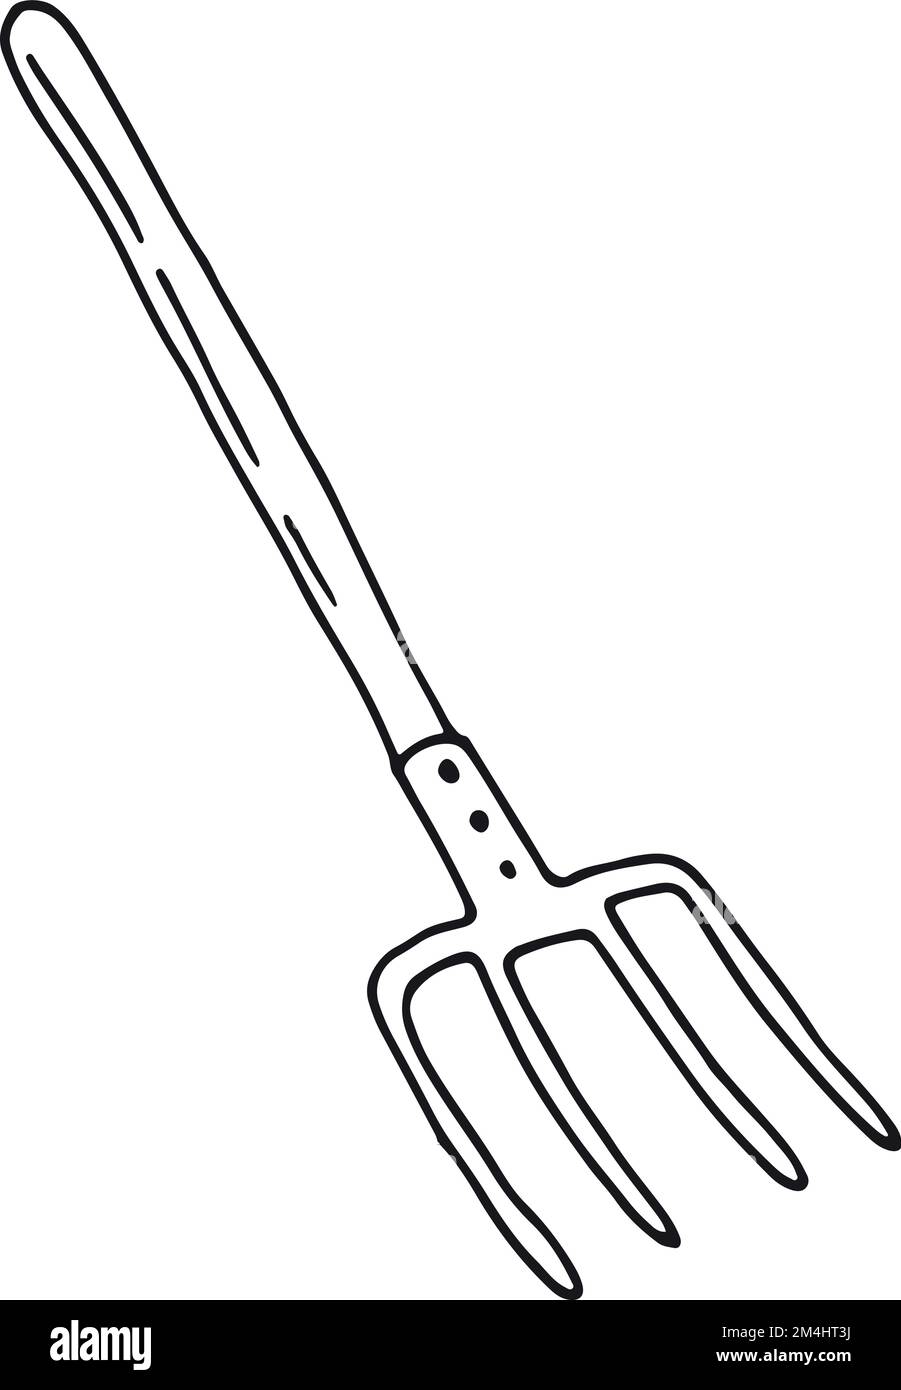 Pitchfork icon. Hand drawn farmer tool sketch Stock Vector Image & Art ...